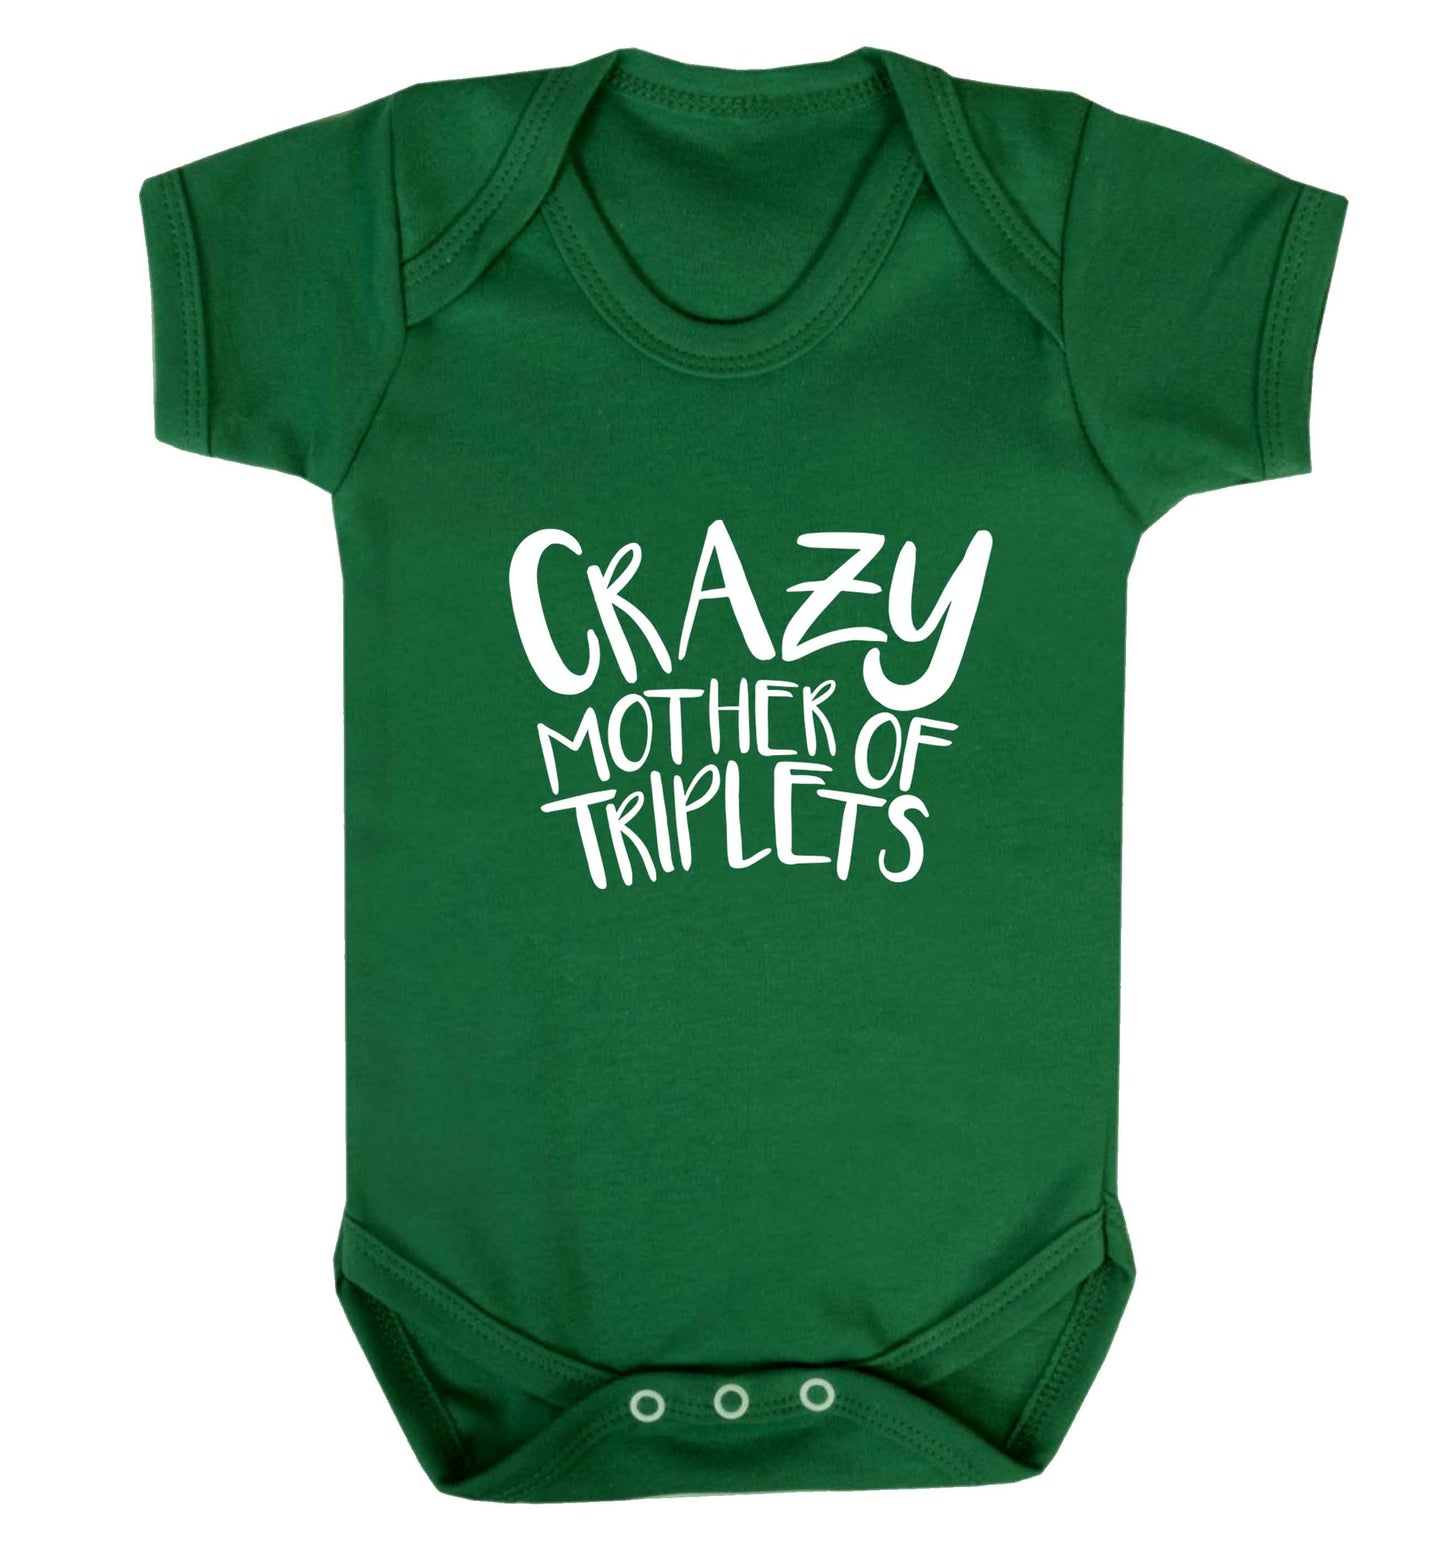 Crazy mother of triplets baby vest green 18-24 months